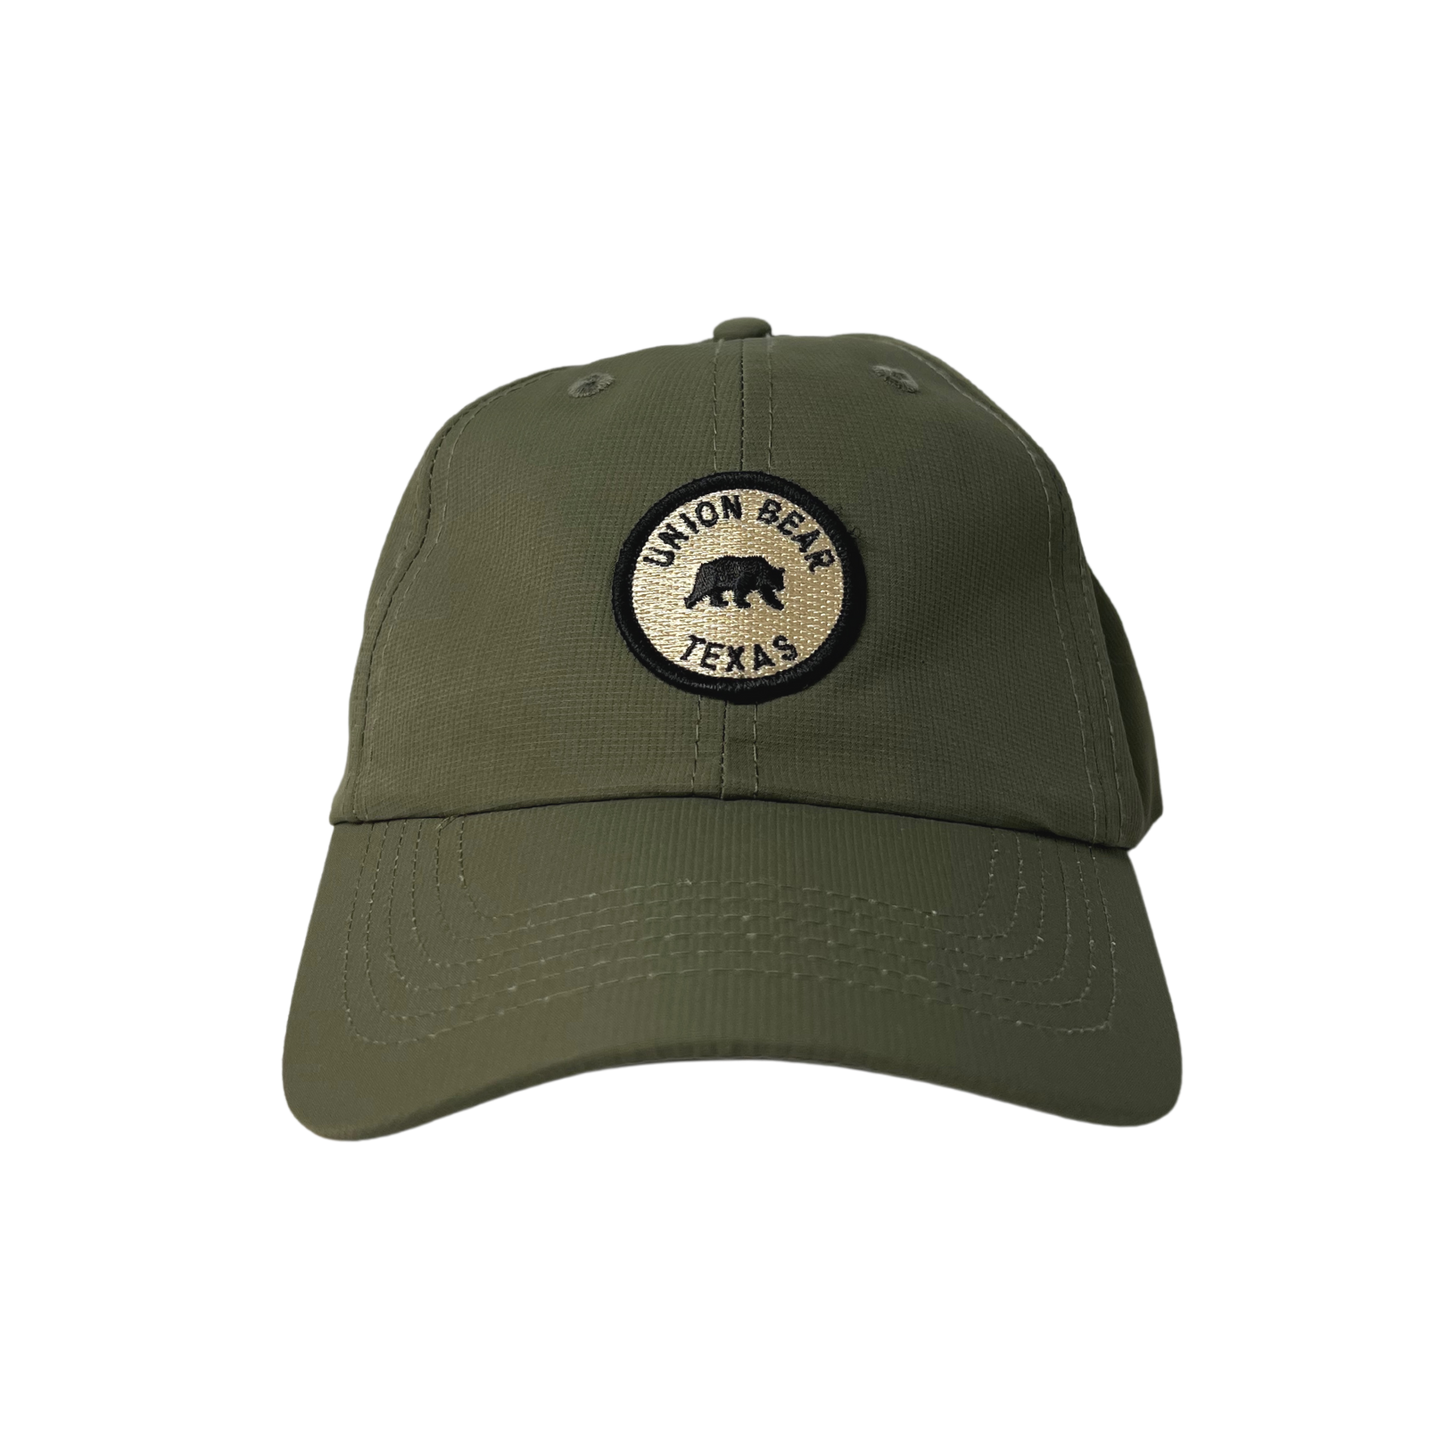 Union Bear Texas Patch Hat - Loden